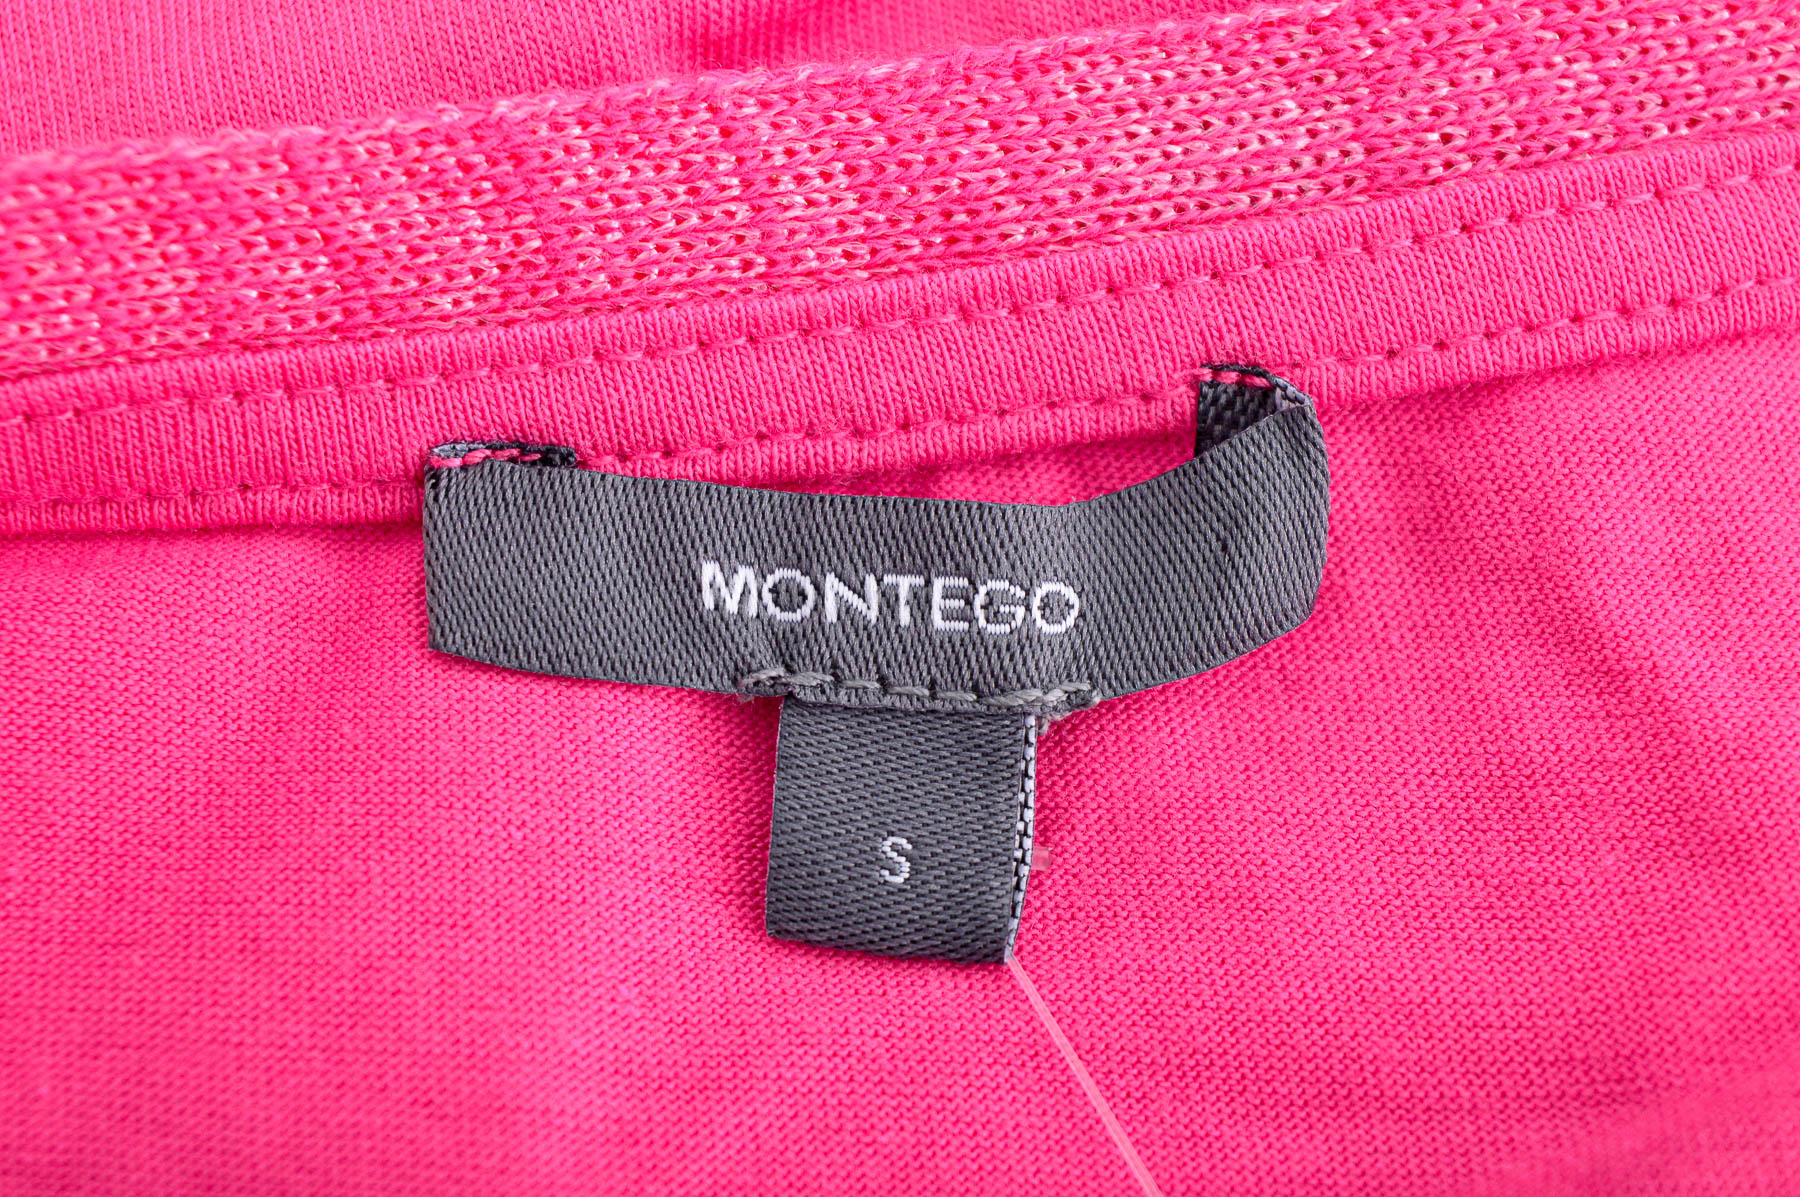 Дамска тениска - MONTEGO - 2